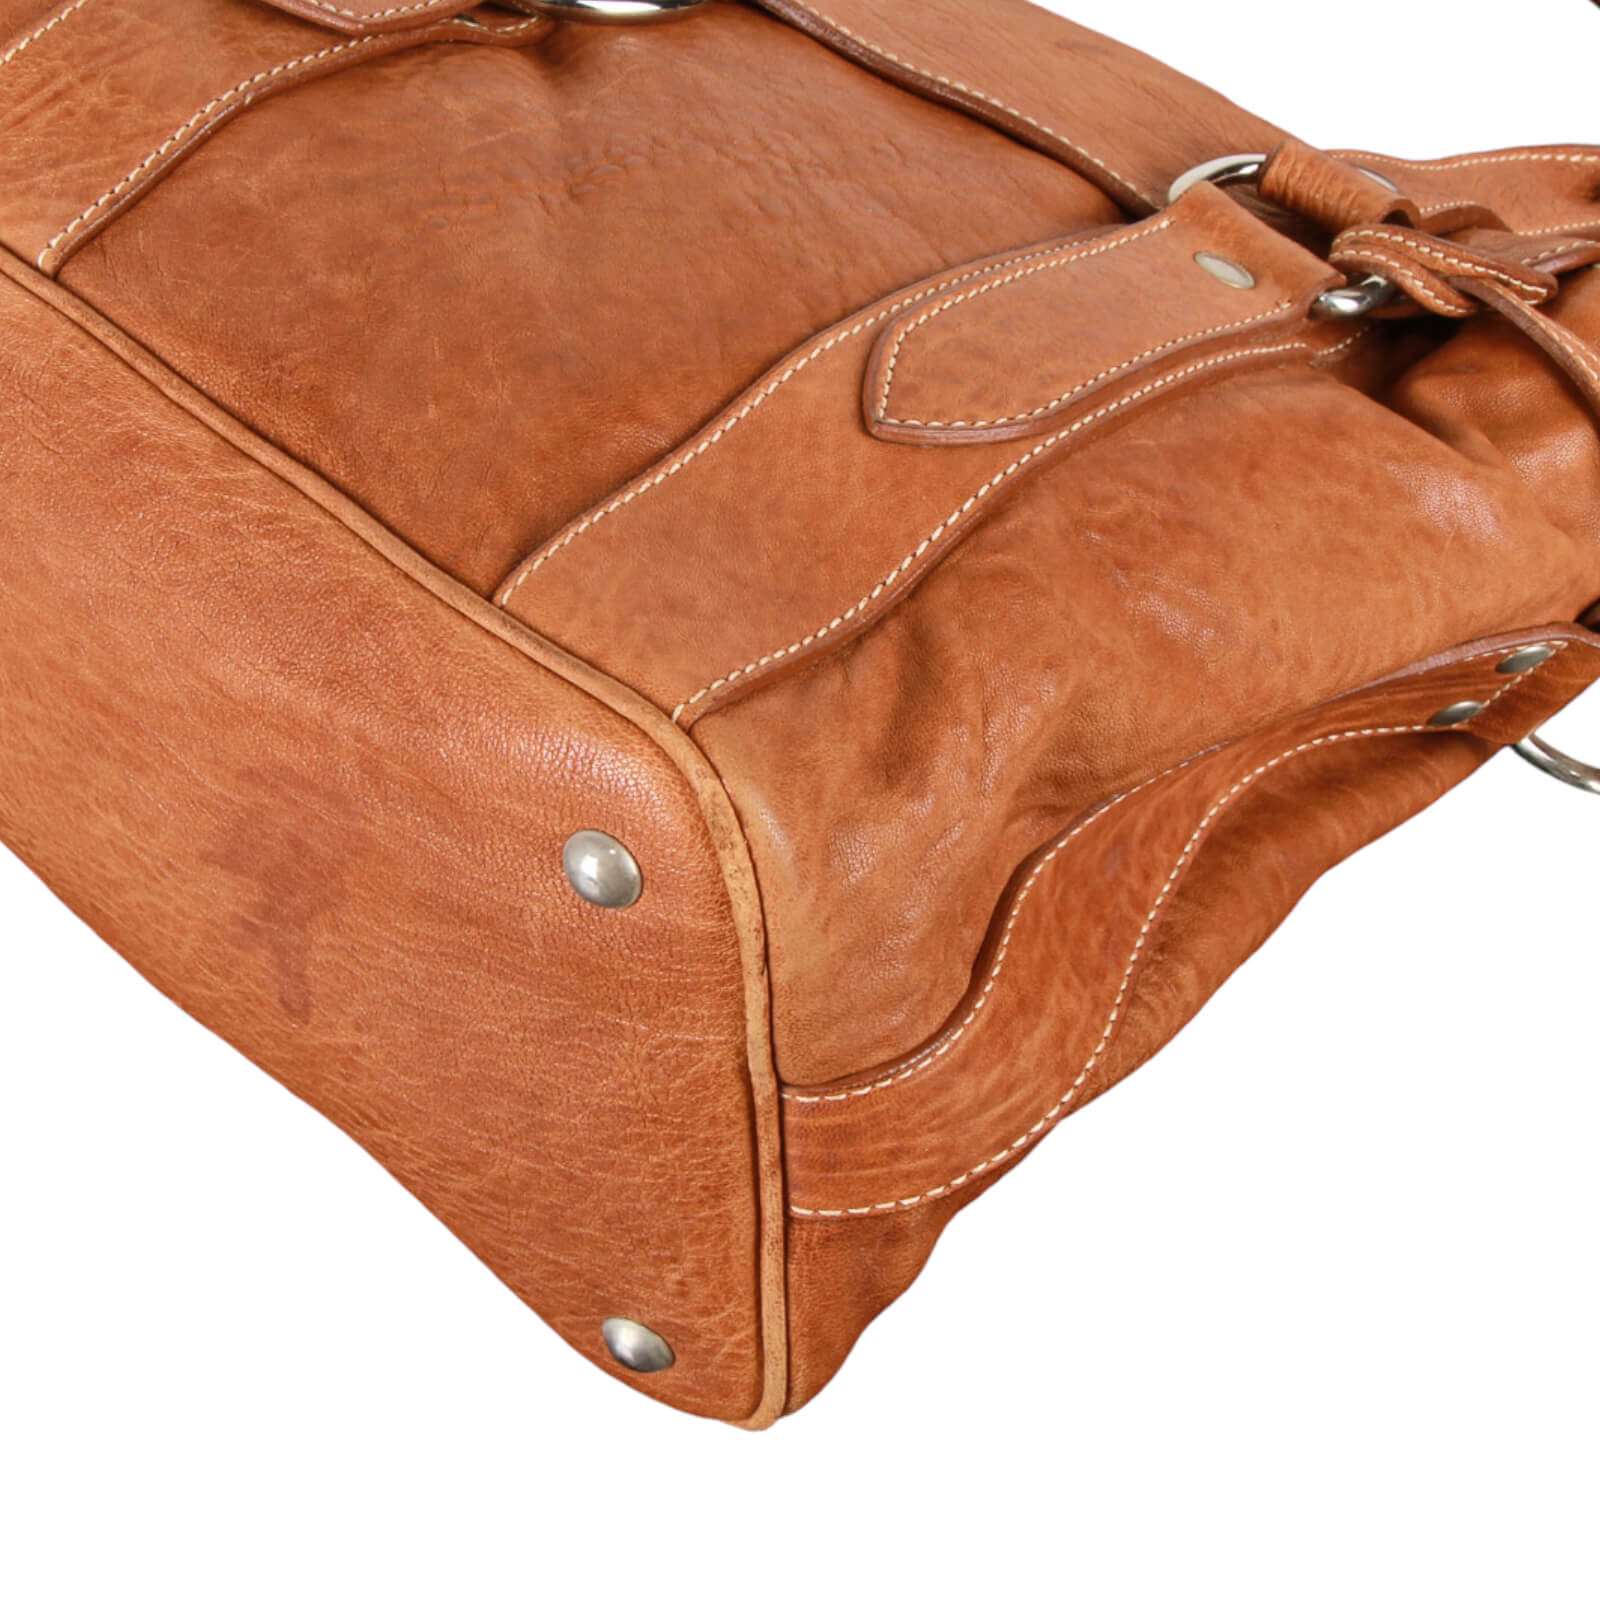 miu miu brown leather bag